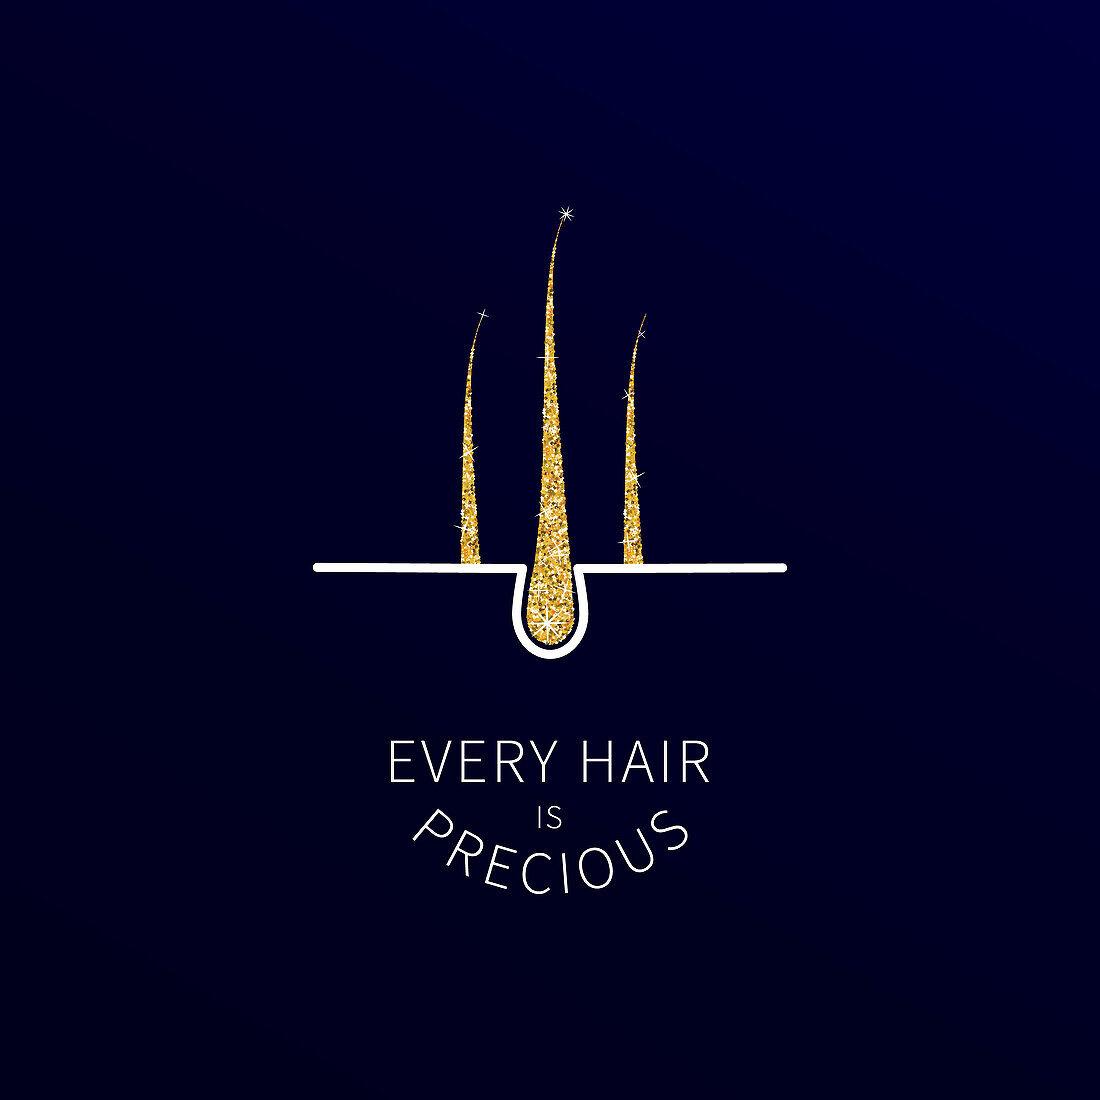 Gold hair follicle, conceptual illustration